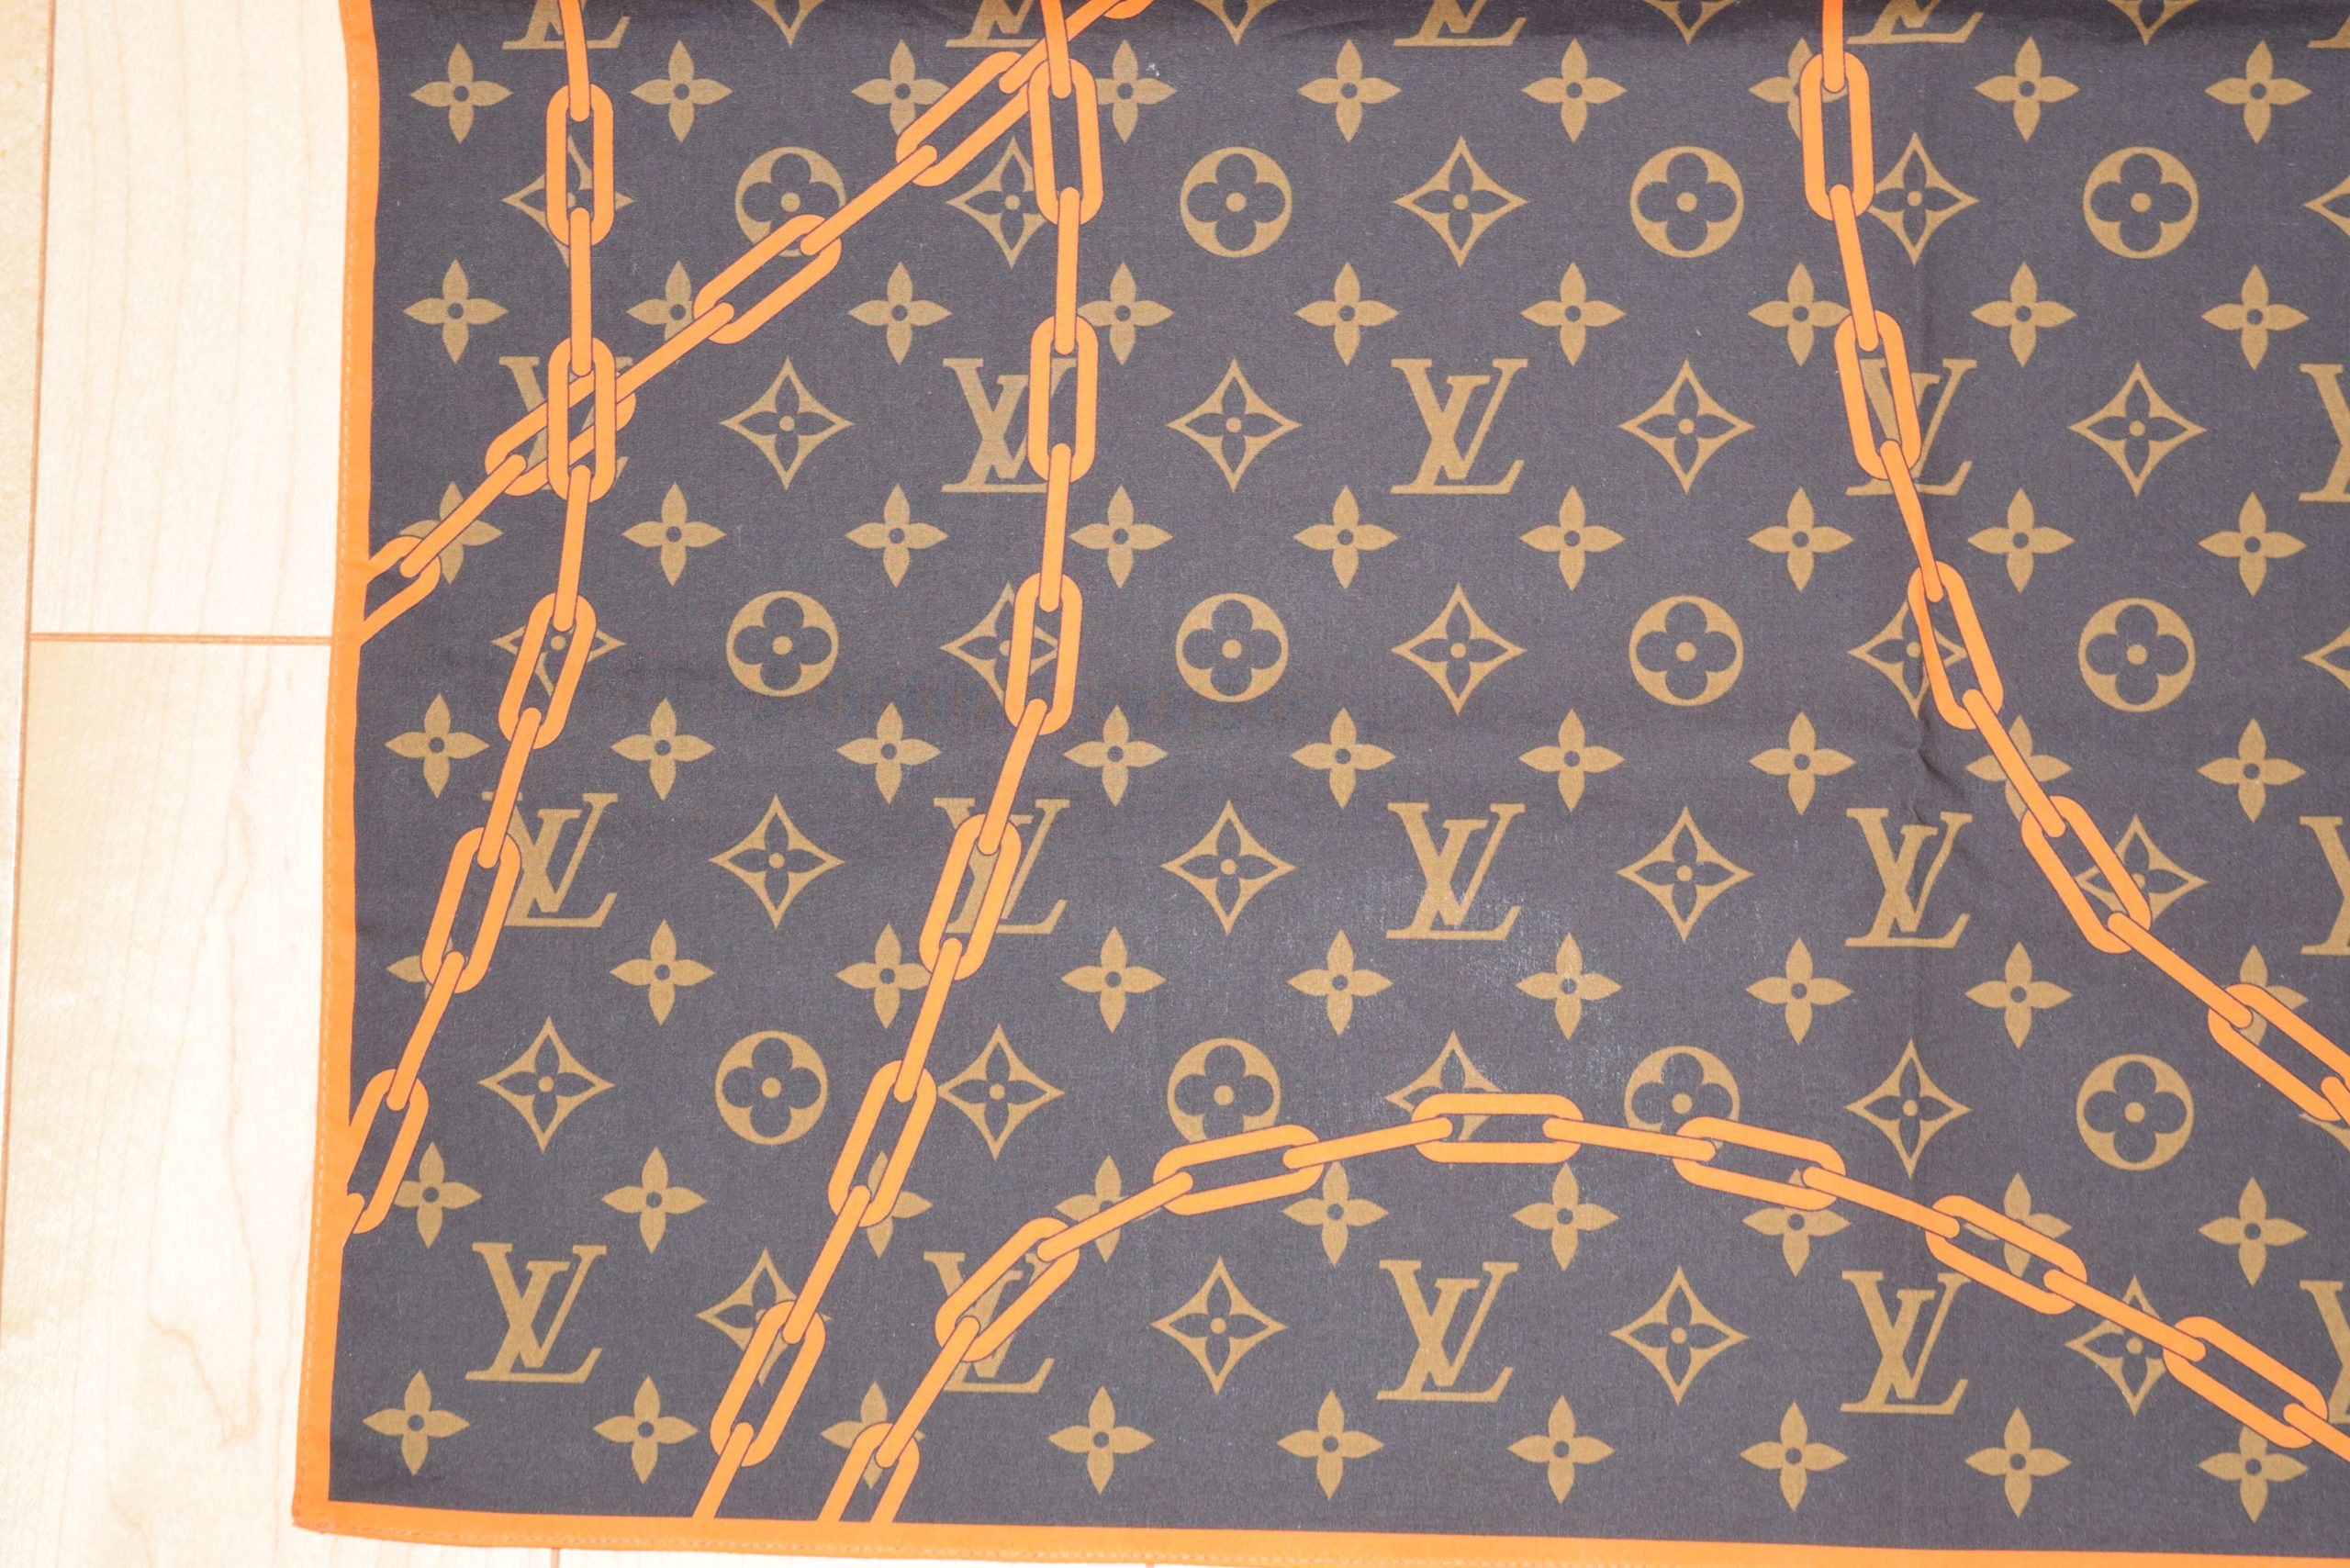 Louis Vuitton Virgil Abloh Monogram Solar Ray Chain Logo Bandana